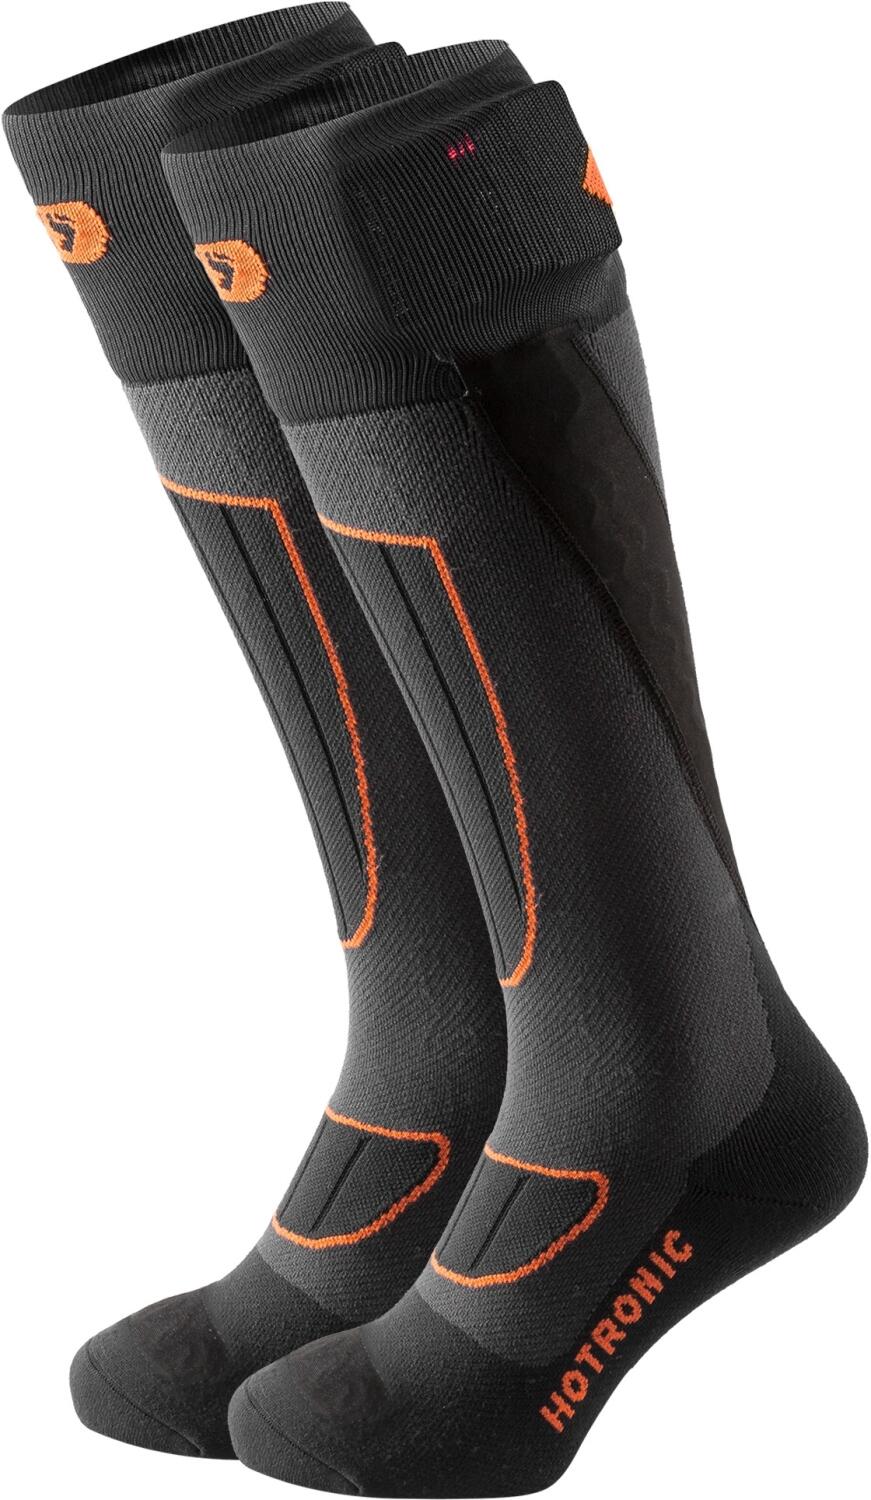 Hotronic Heat Socks Surround Comfort (32.0 - 34.0, anthrazit/orange, 1 Paar) von Hotronic